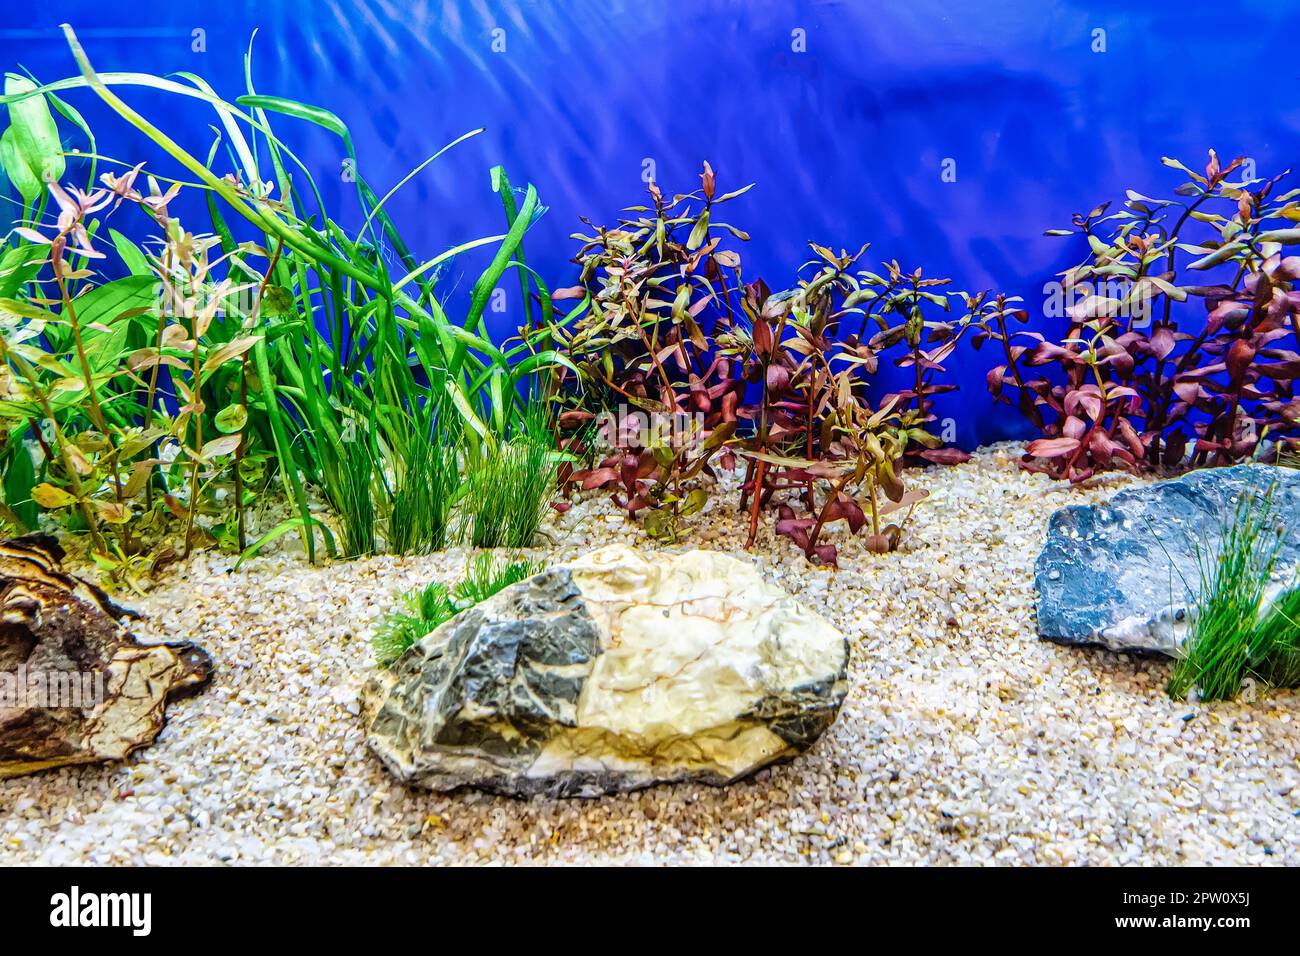 Aquarium decoration hi-res stock photography and images - Alamy